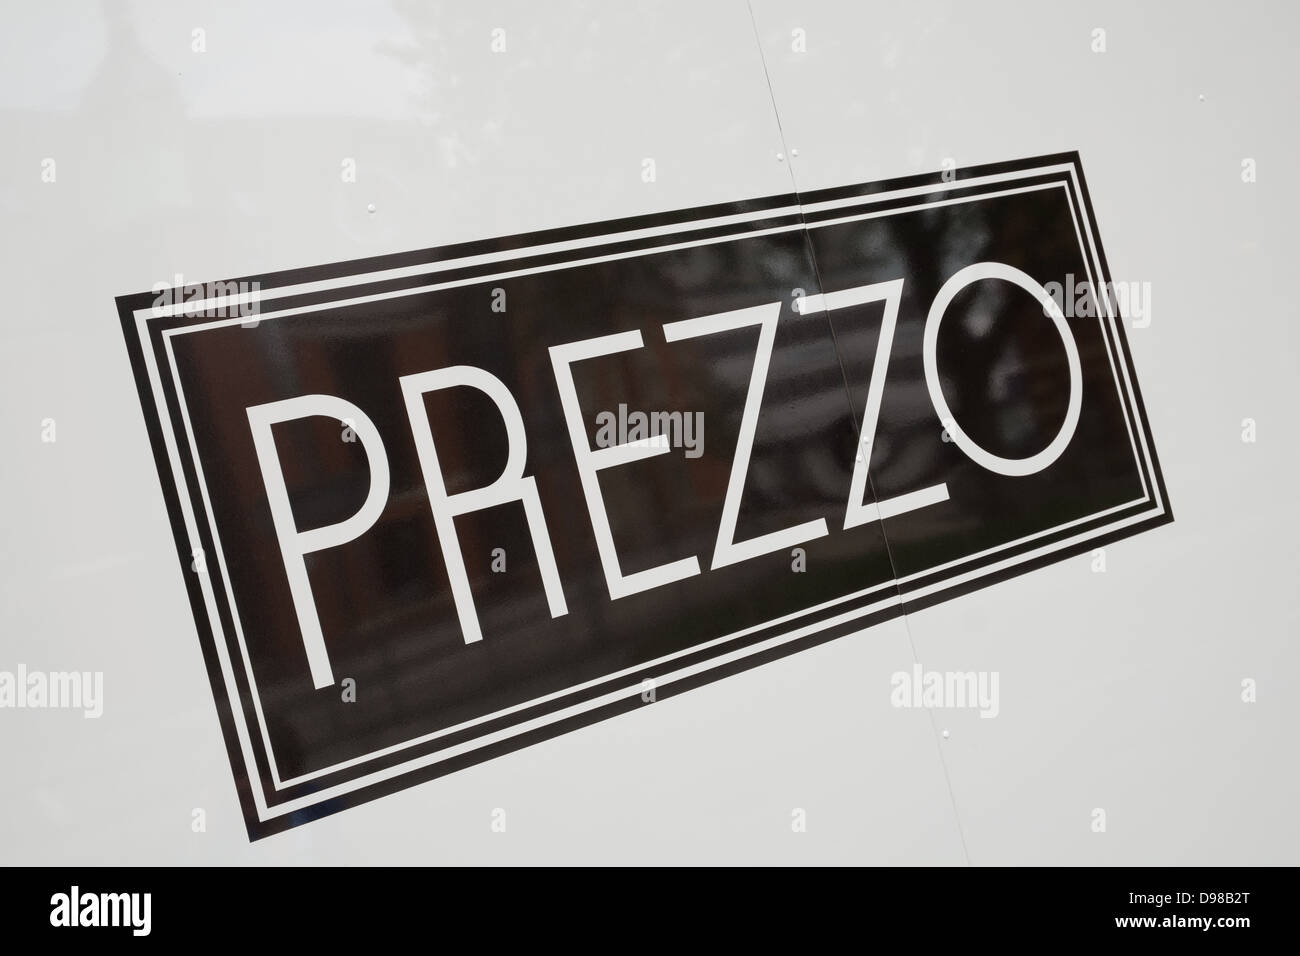 The sign of UK Italian restaurant chain Prezzo Stock Photo